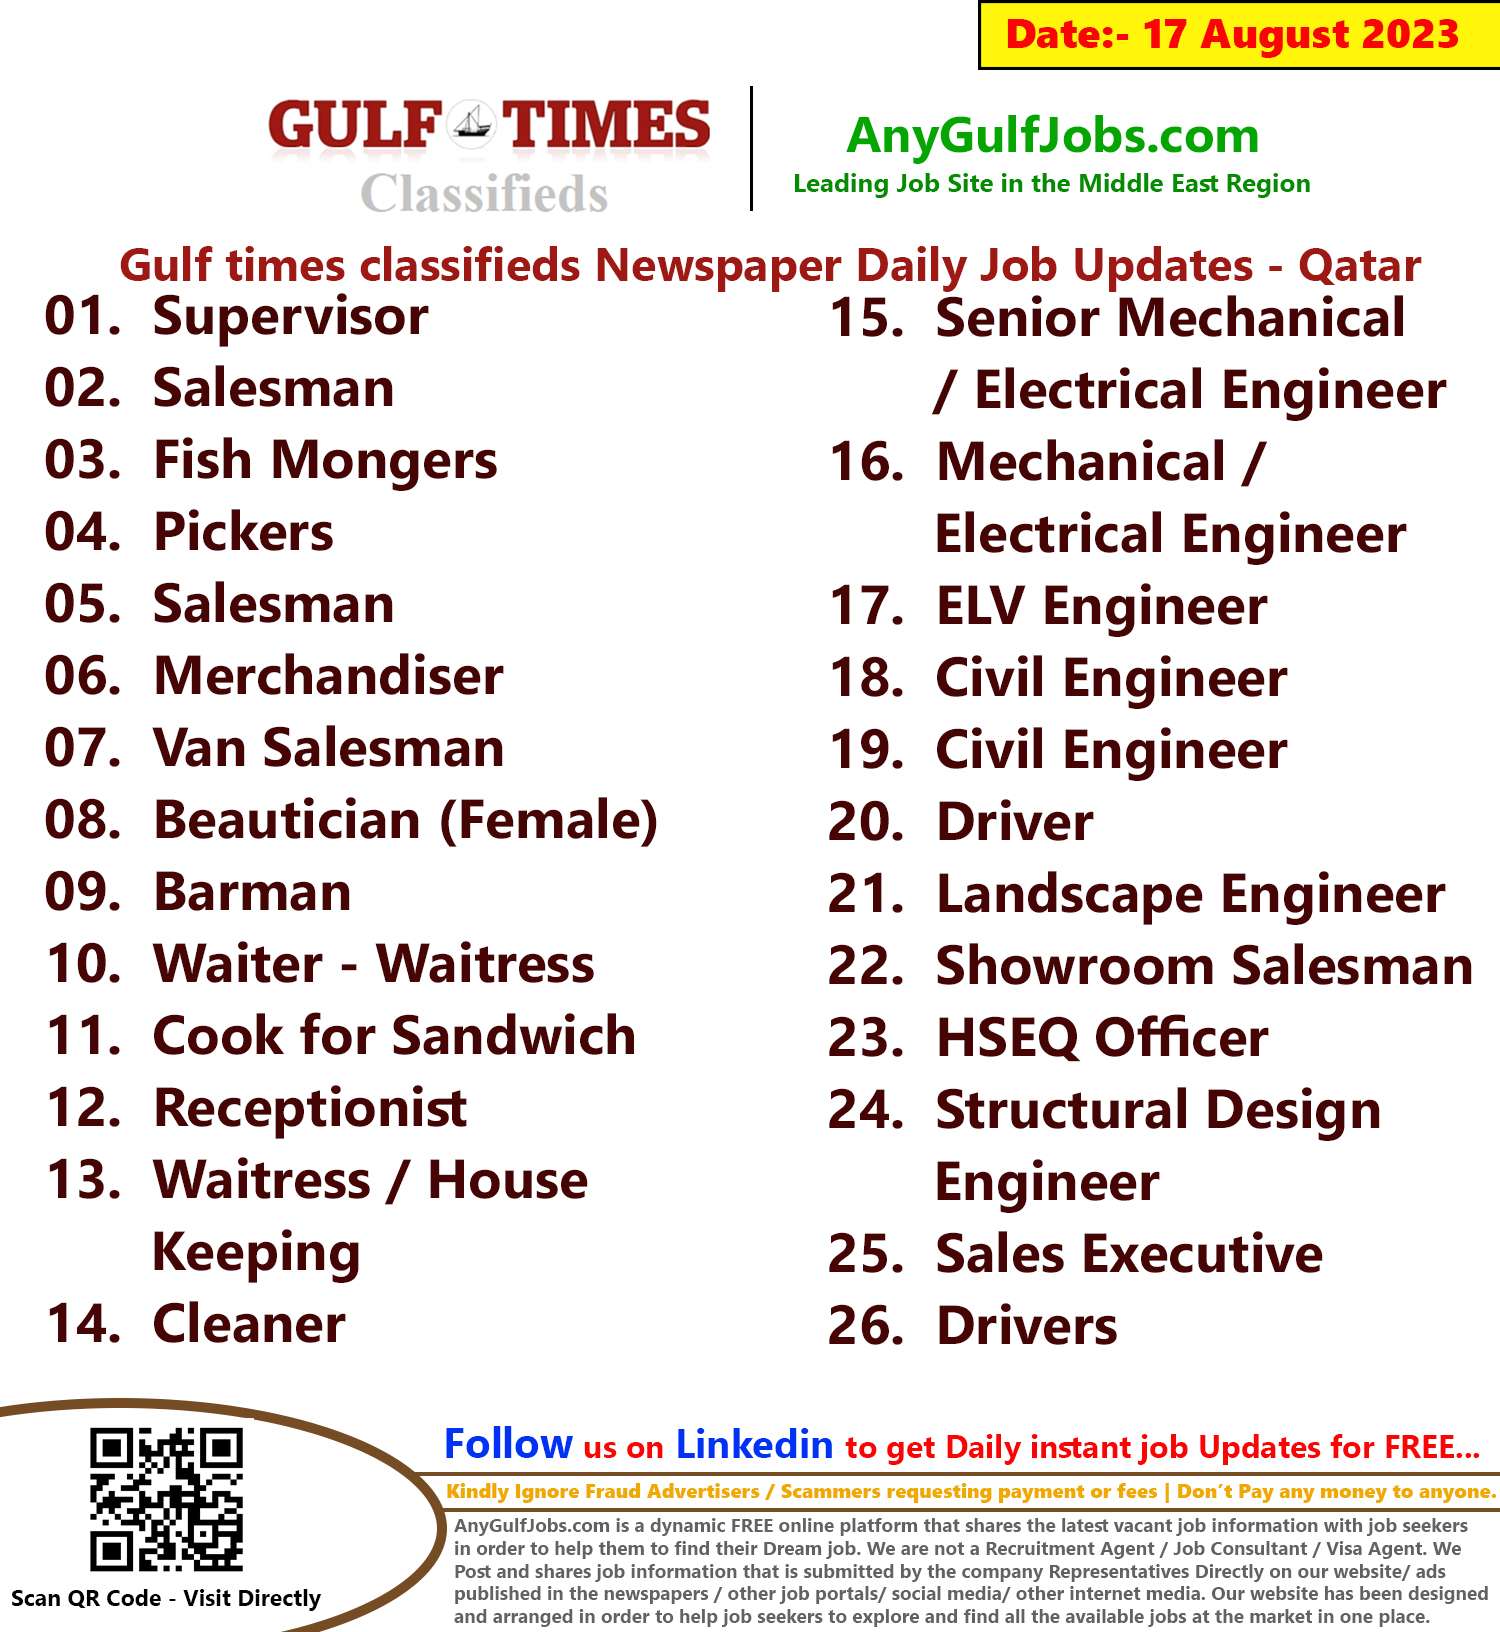 Gulf times classifieds Job Vacancies Qatar - 17 August 2023